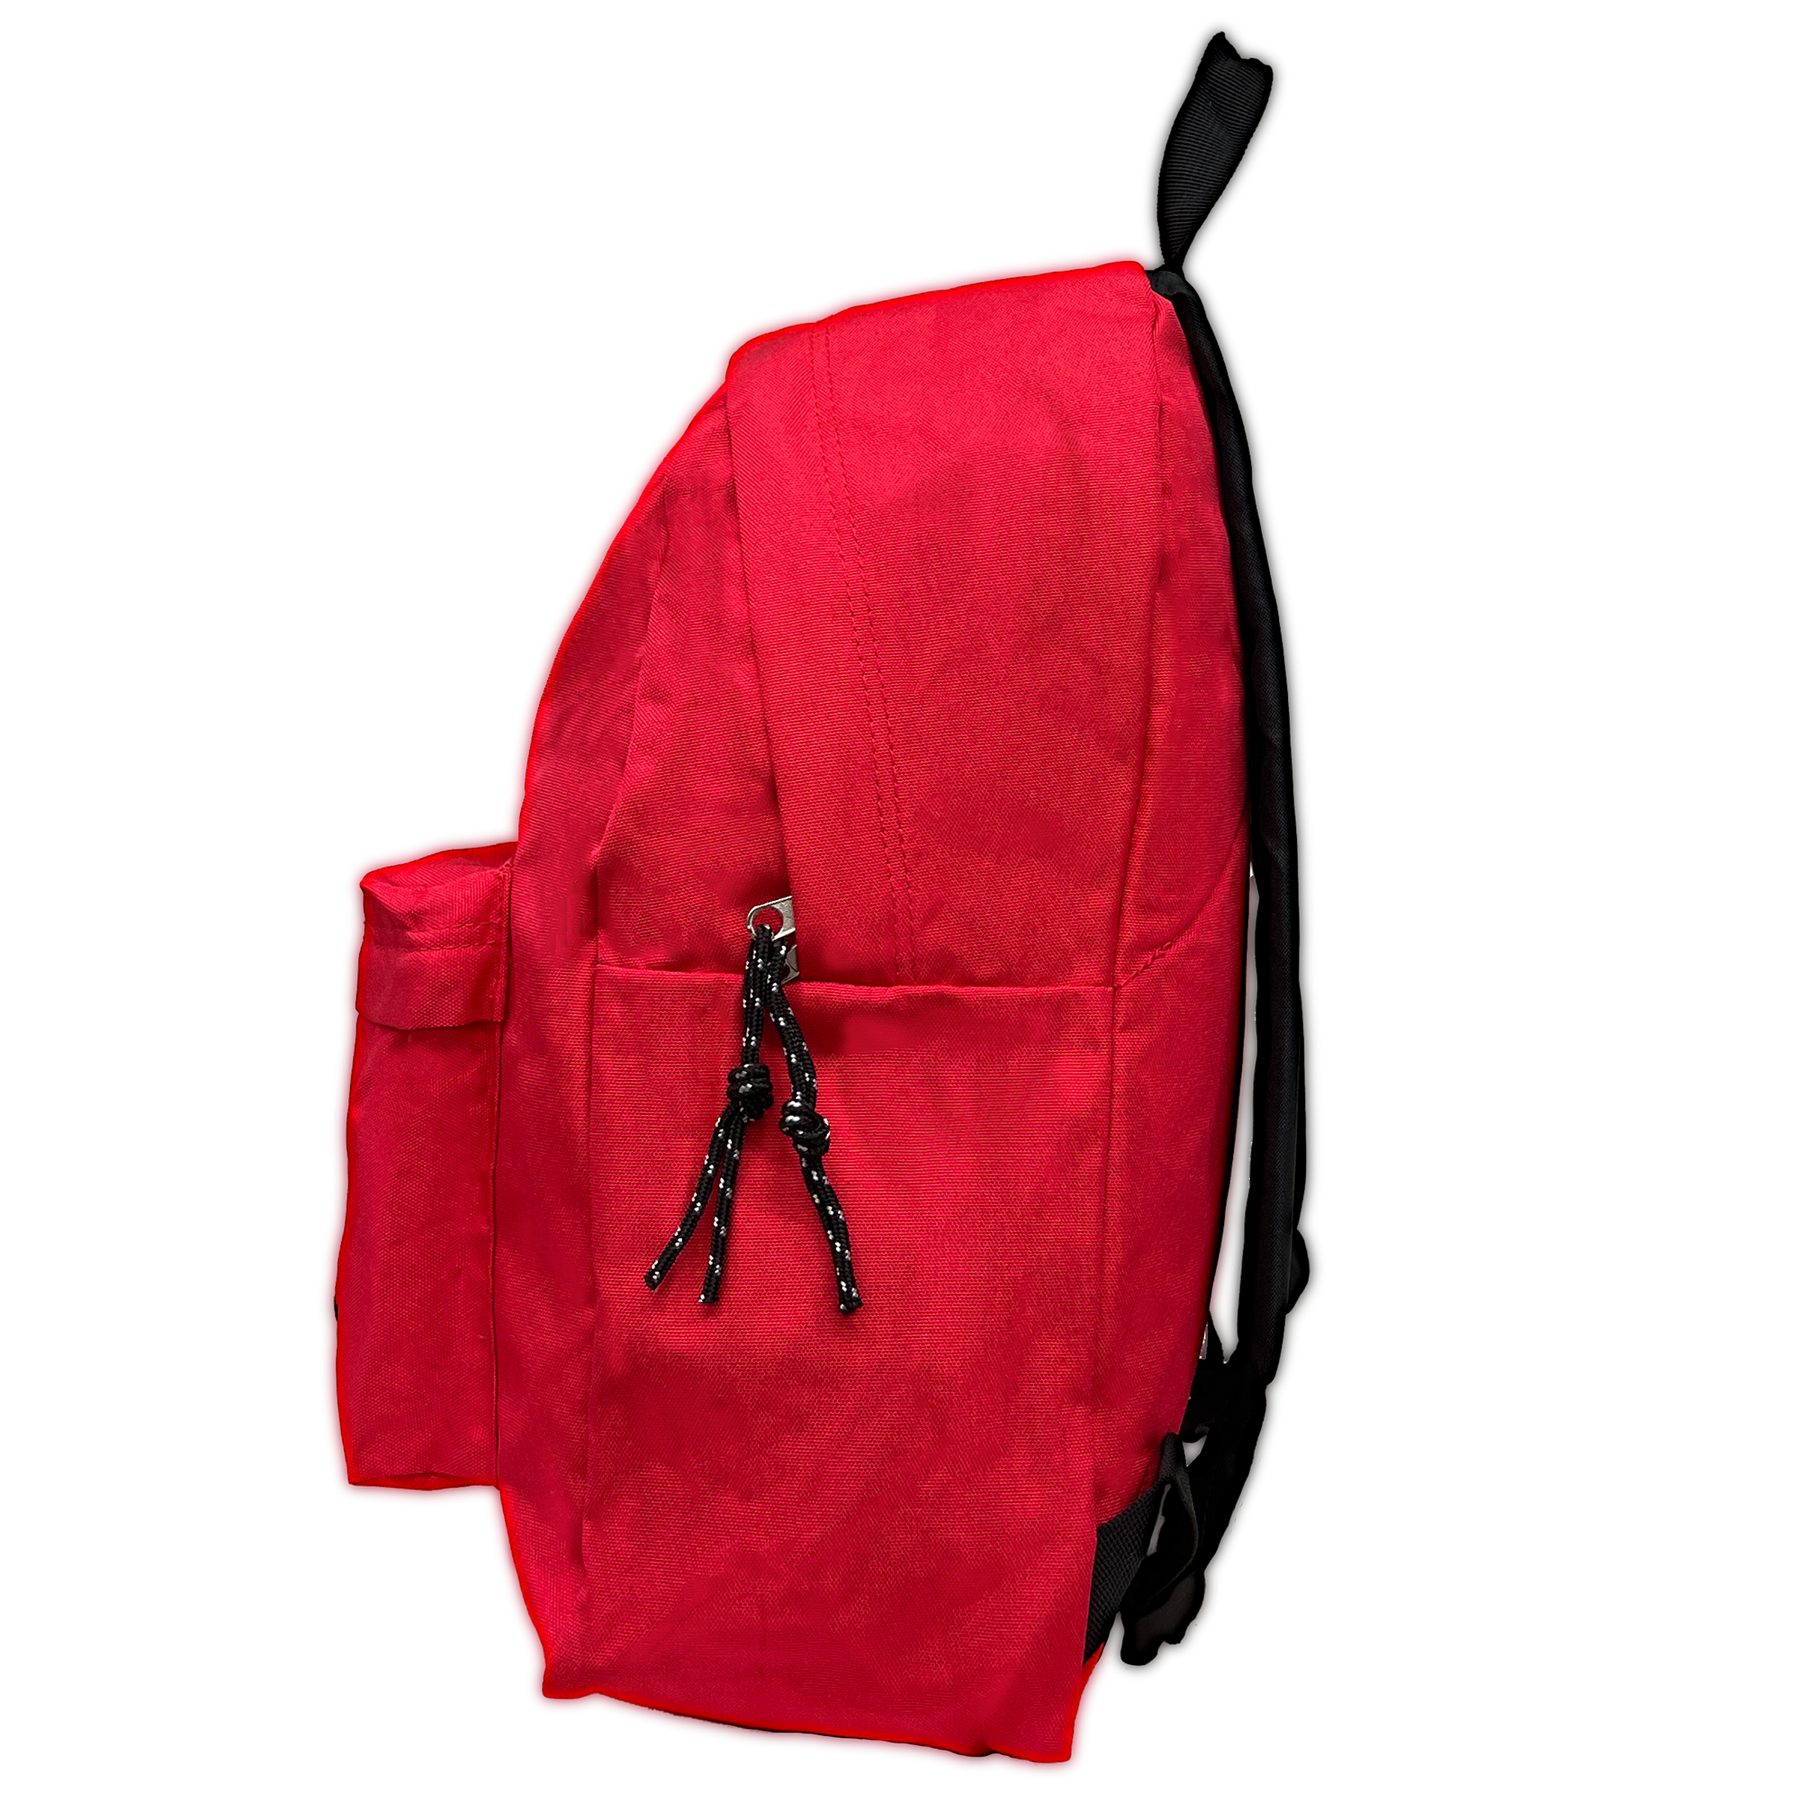 Coveri World - Izdržljivi ruksak od poliestera - 44 x 29,5 x 22 cm, 27 litara